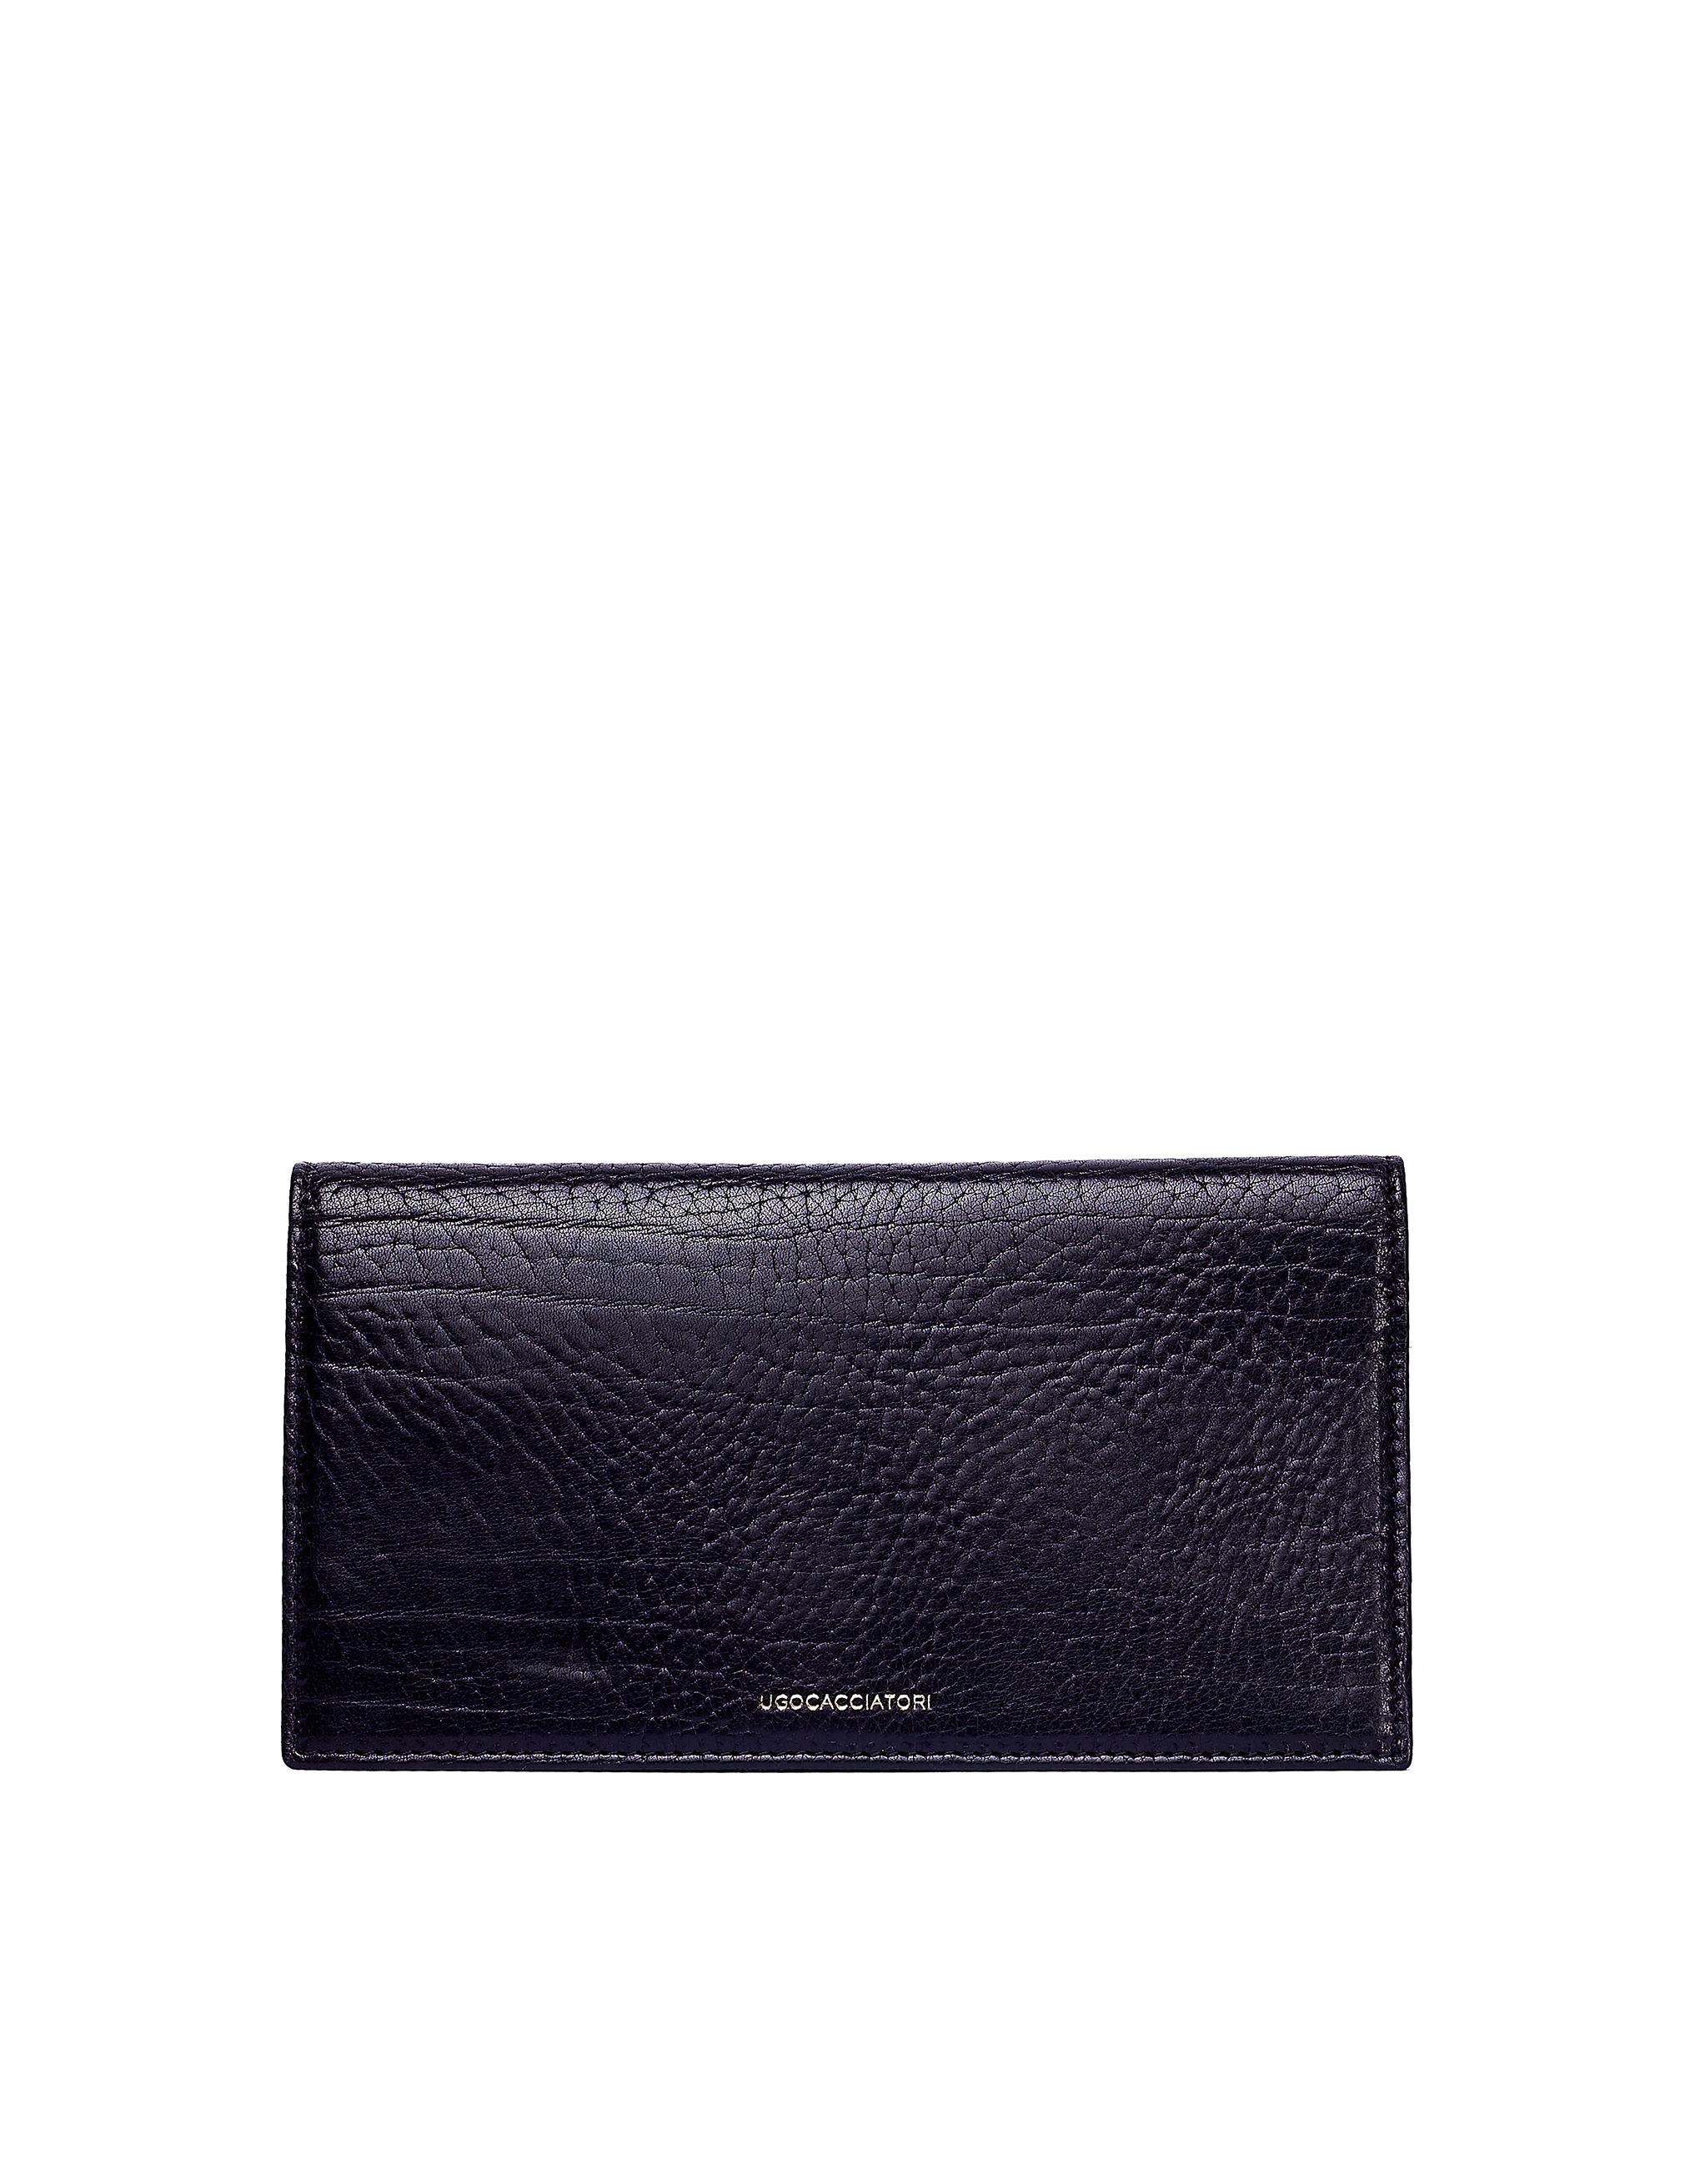 Черный кожаный кошелек Pocket Ugo Cacciatori WL111/VRN, размер One Size WL111/VRN - фото 1